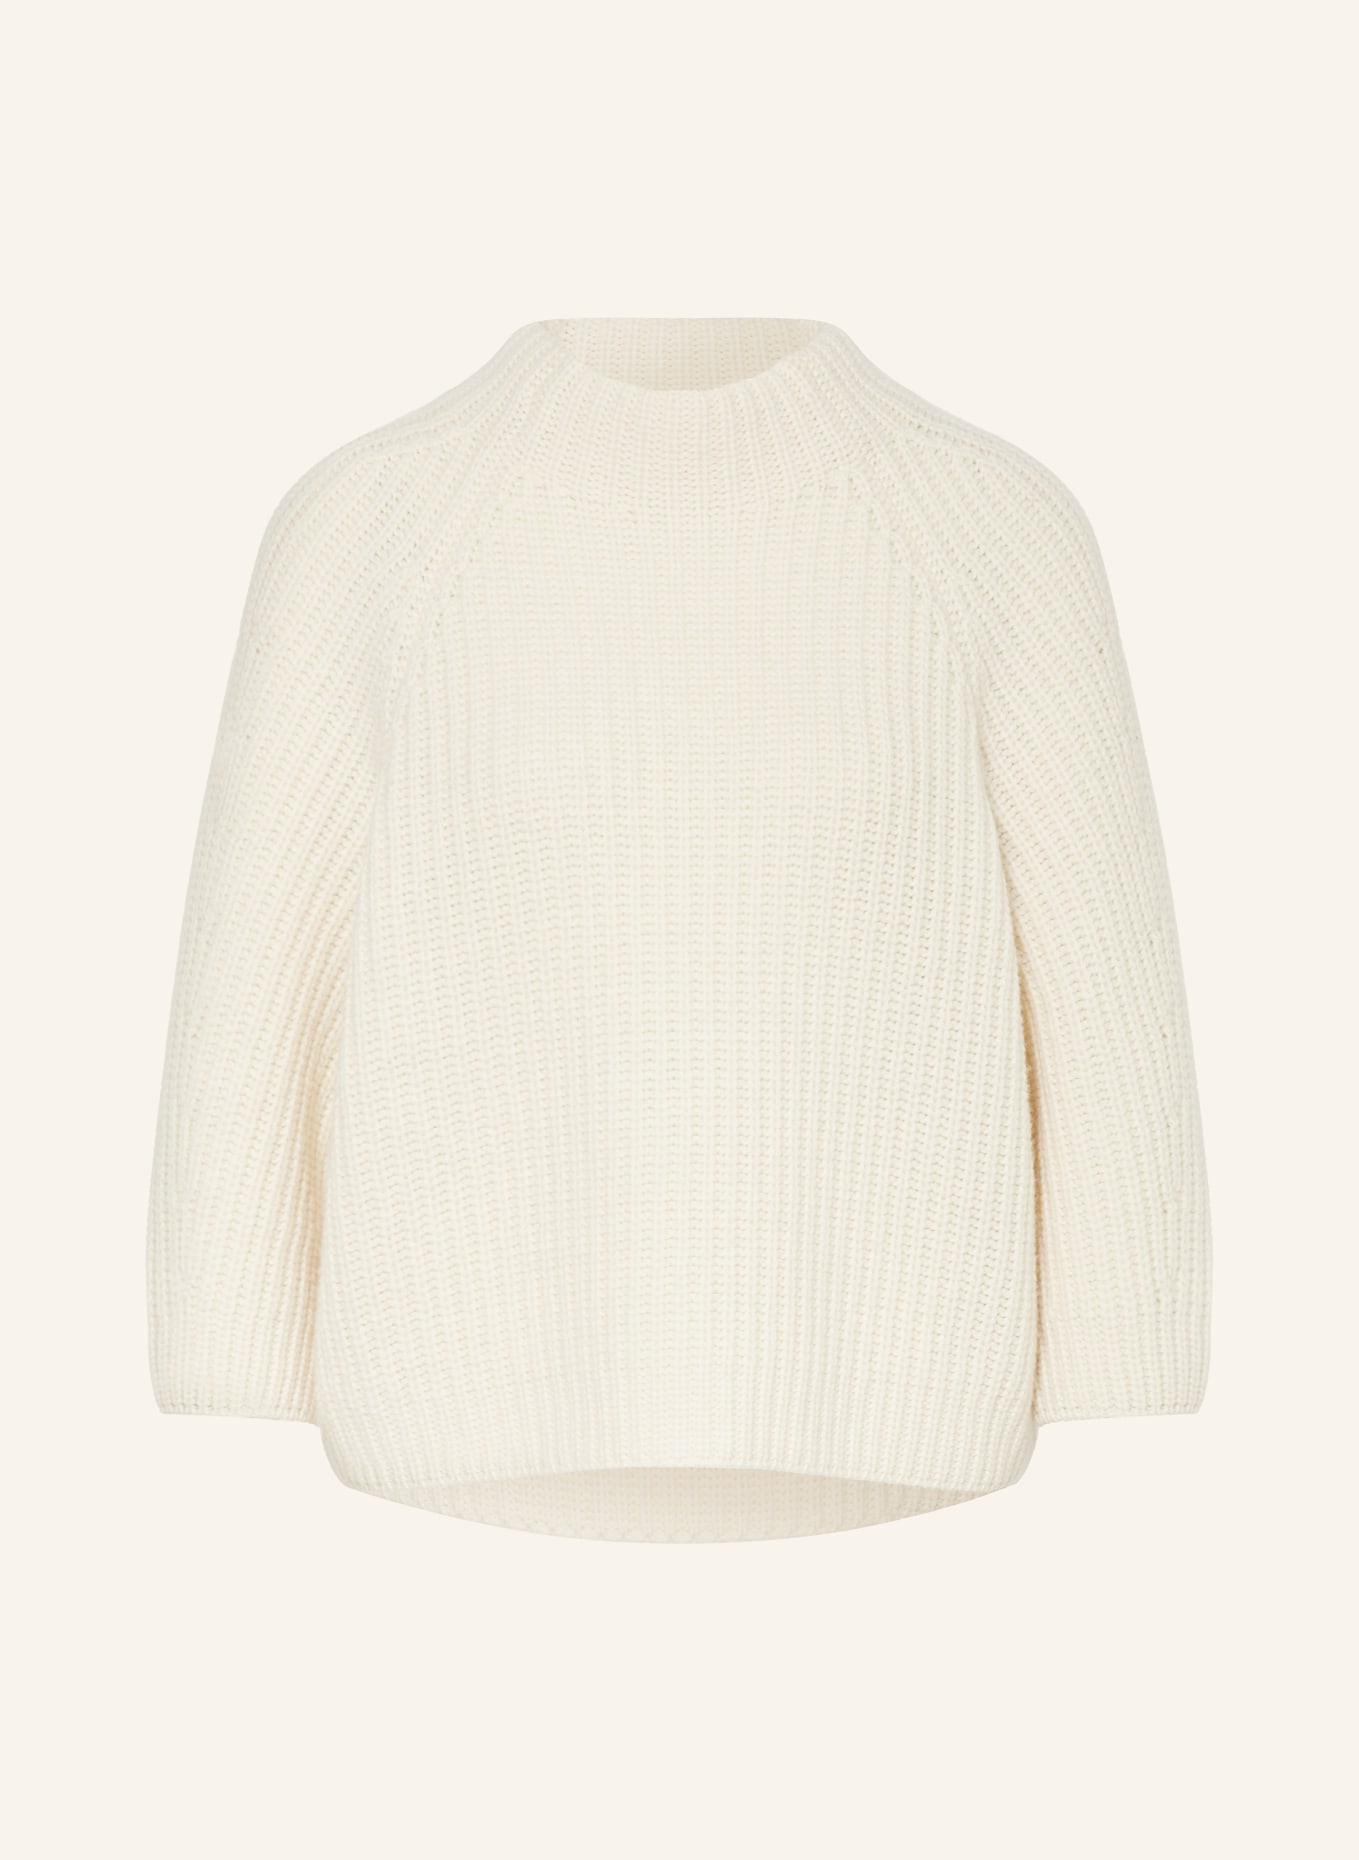 IRIS von ARNIM Cashmere sweater FALLOU with 3/4 sleeves, Color: ECRU (Image 1)